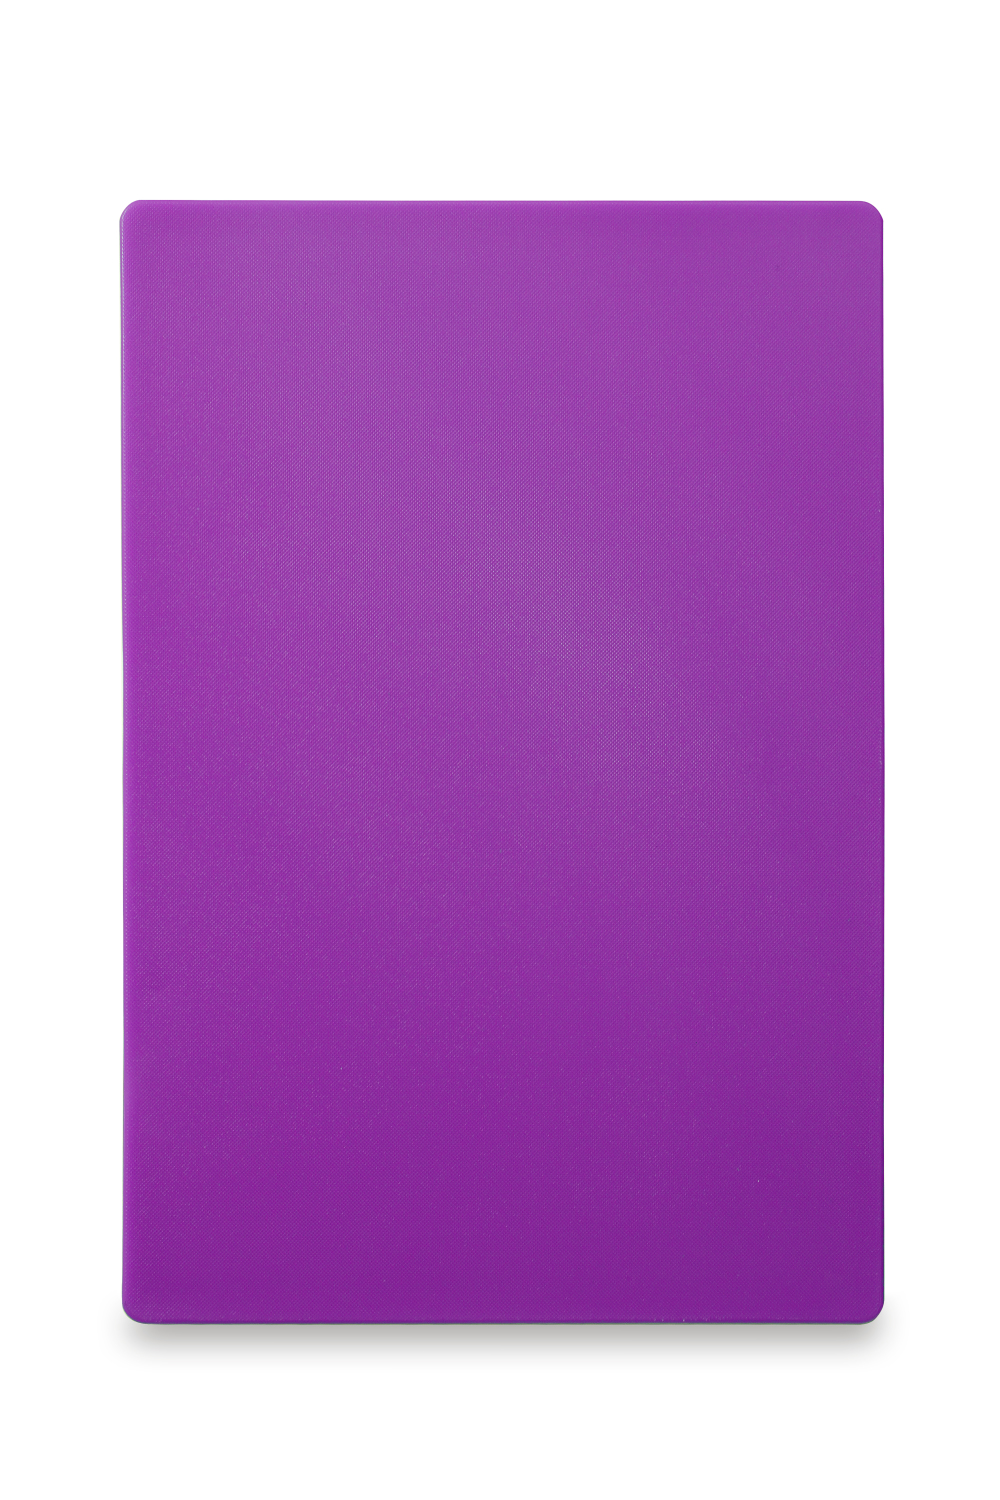 HACCP-Violett Schneidbrett 600x400mm